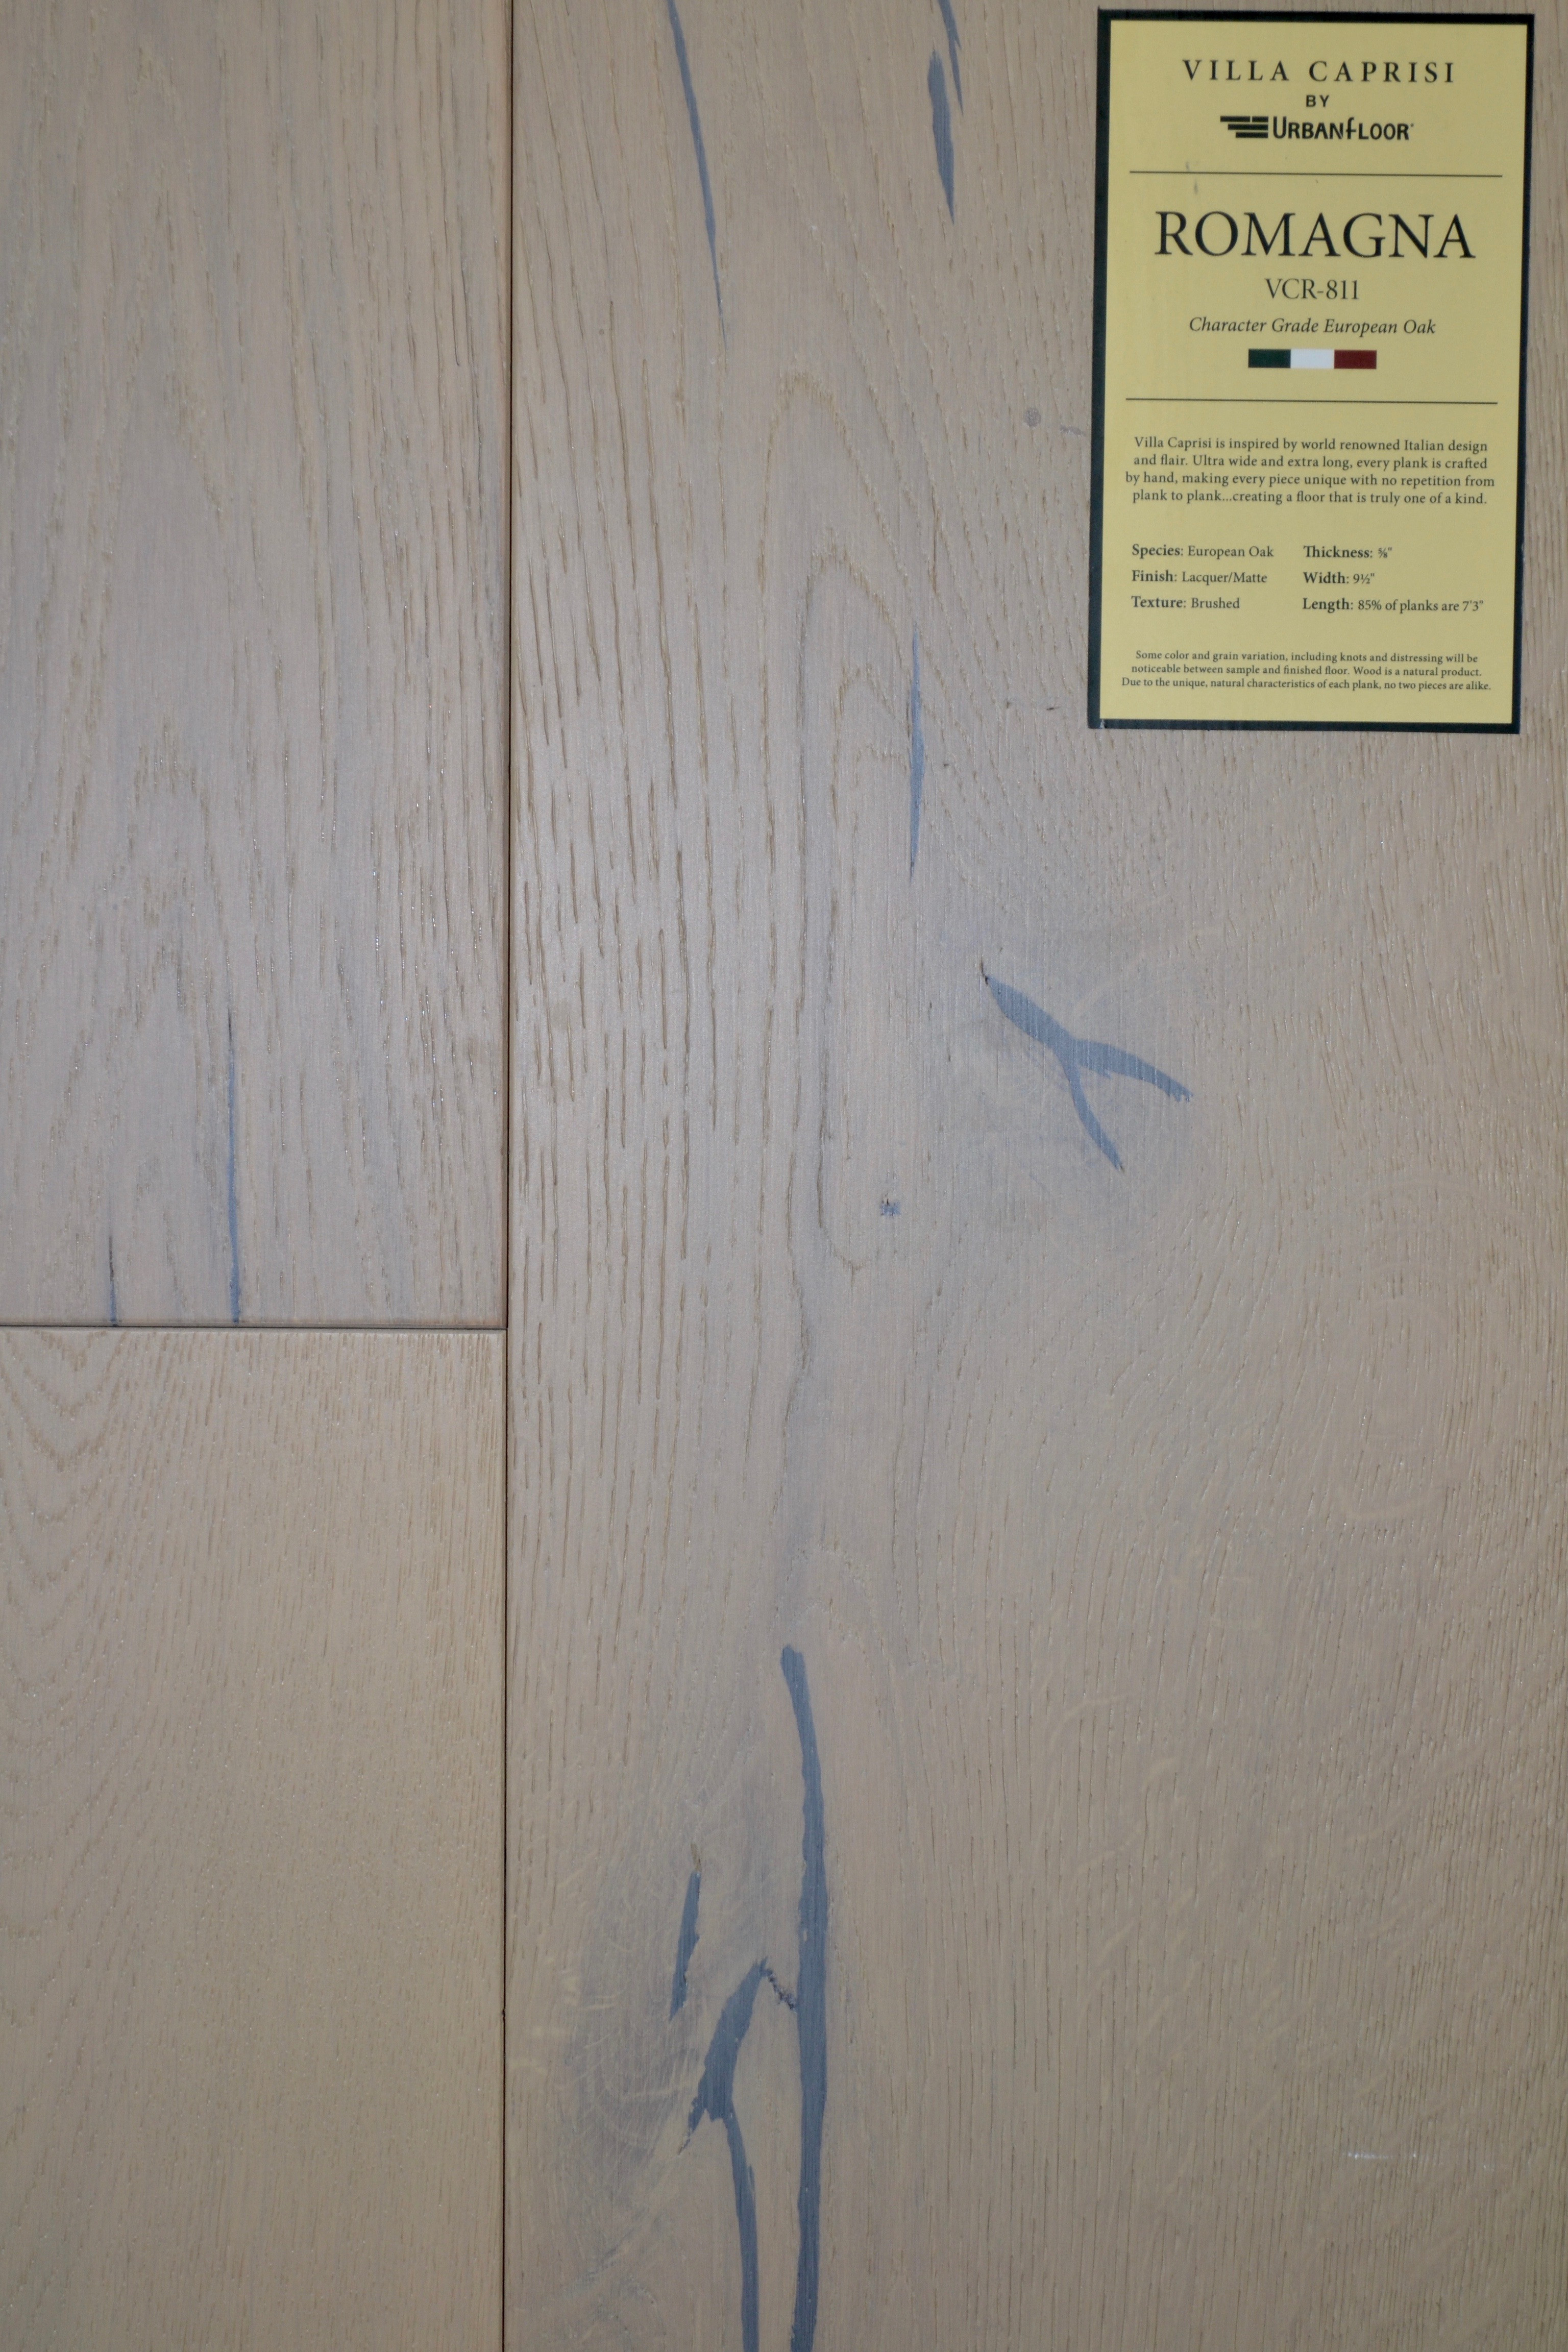 hardwood floor installers austin tx of villa caprisi fine european hardwood millennium hardwood in european style inspired designer oak floor romagna by villa caprisi